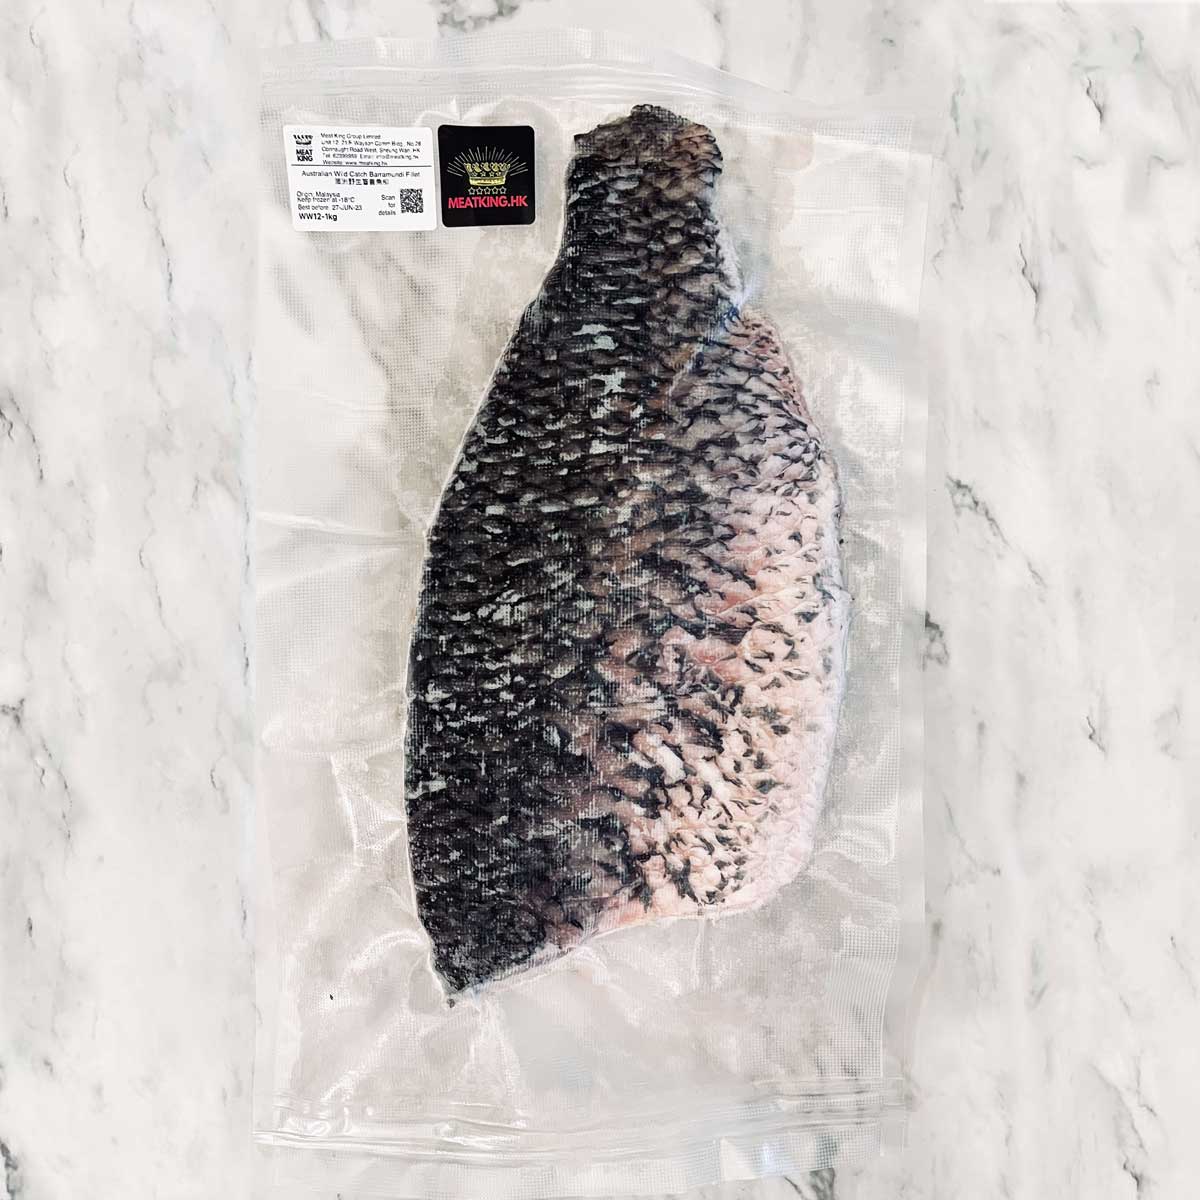 Fresh Australian Wild Catch Barramundi Fillet from MeatKing.hk3